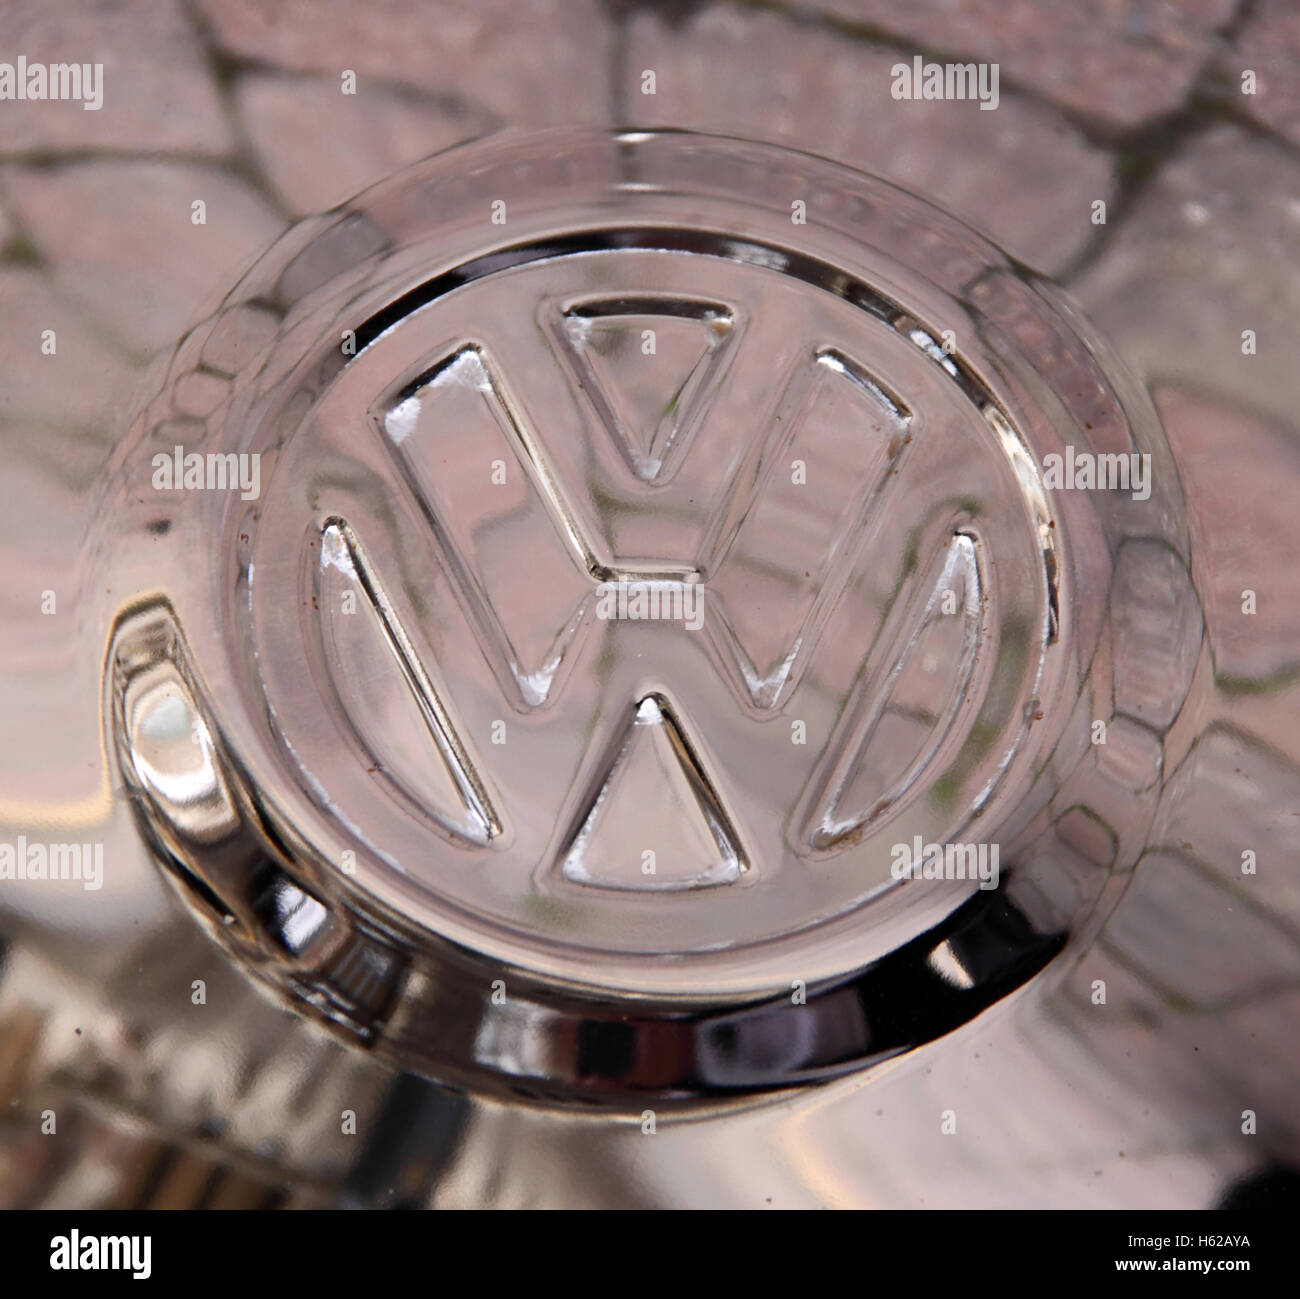 A Volkswagen chrome hubcap Stock Photo